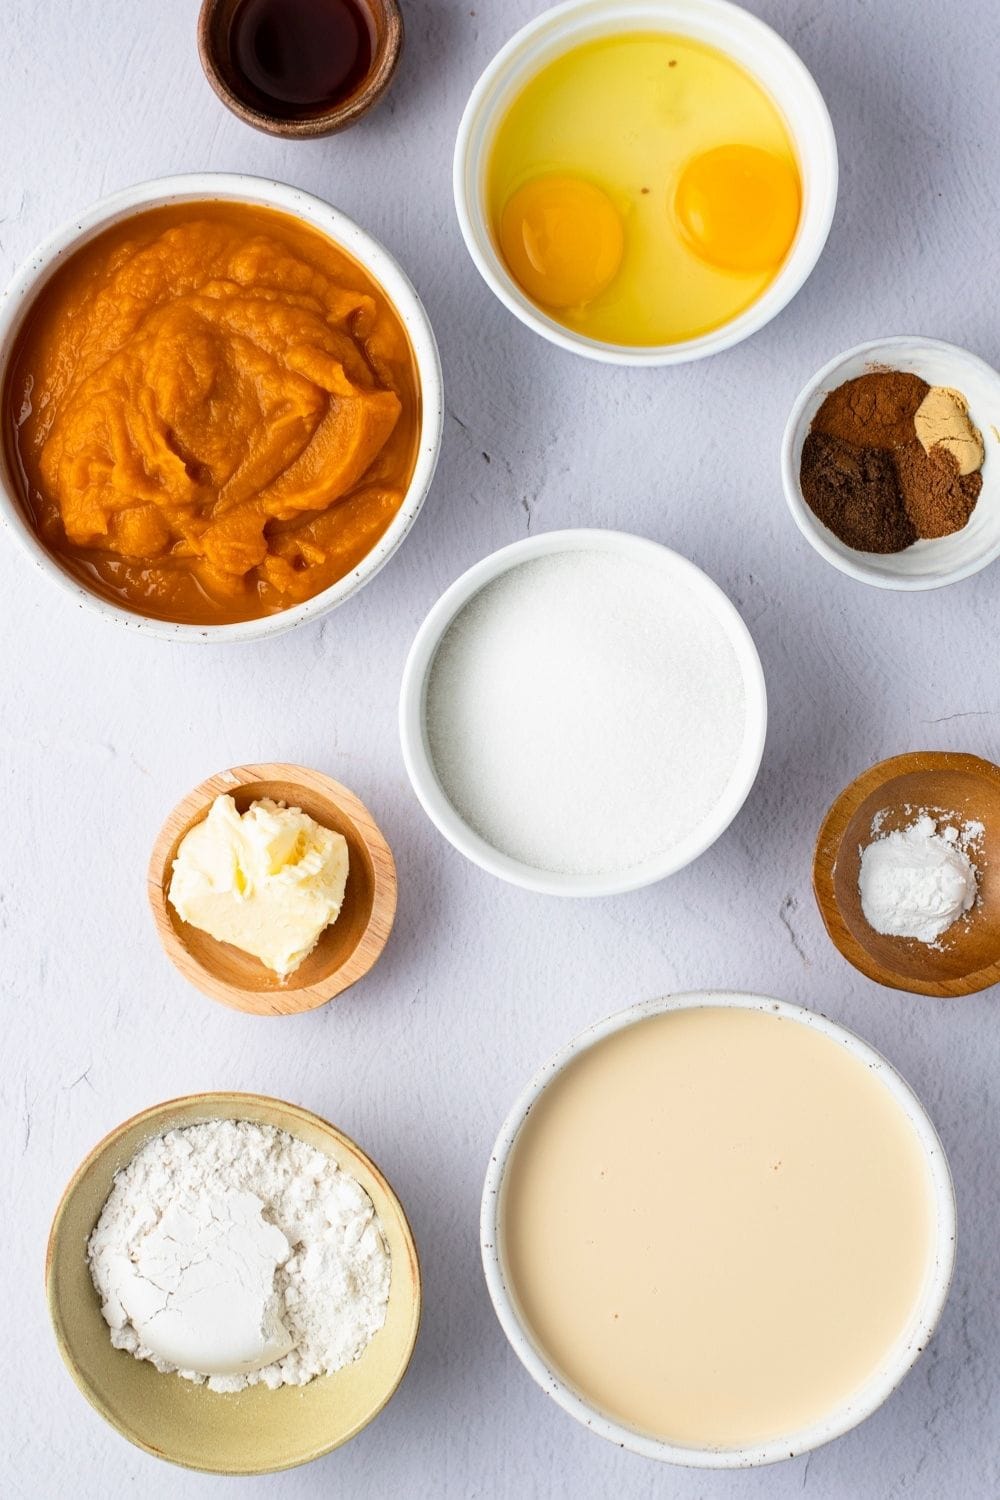 Impossible Pumpkin Pie Ingredients: Pumpkin Puree, Eggs, Butter Spices, Evaporated Milk, and Ground Nutmeg